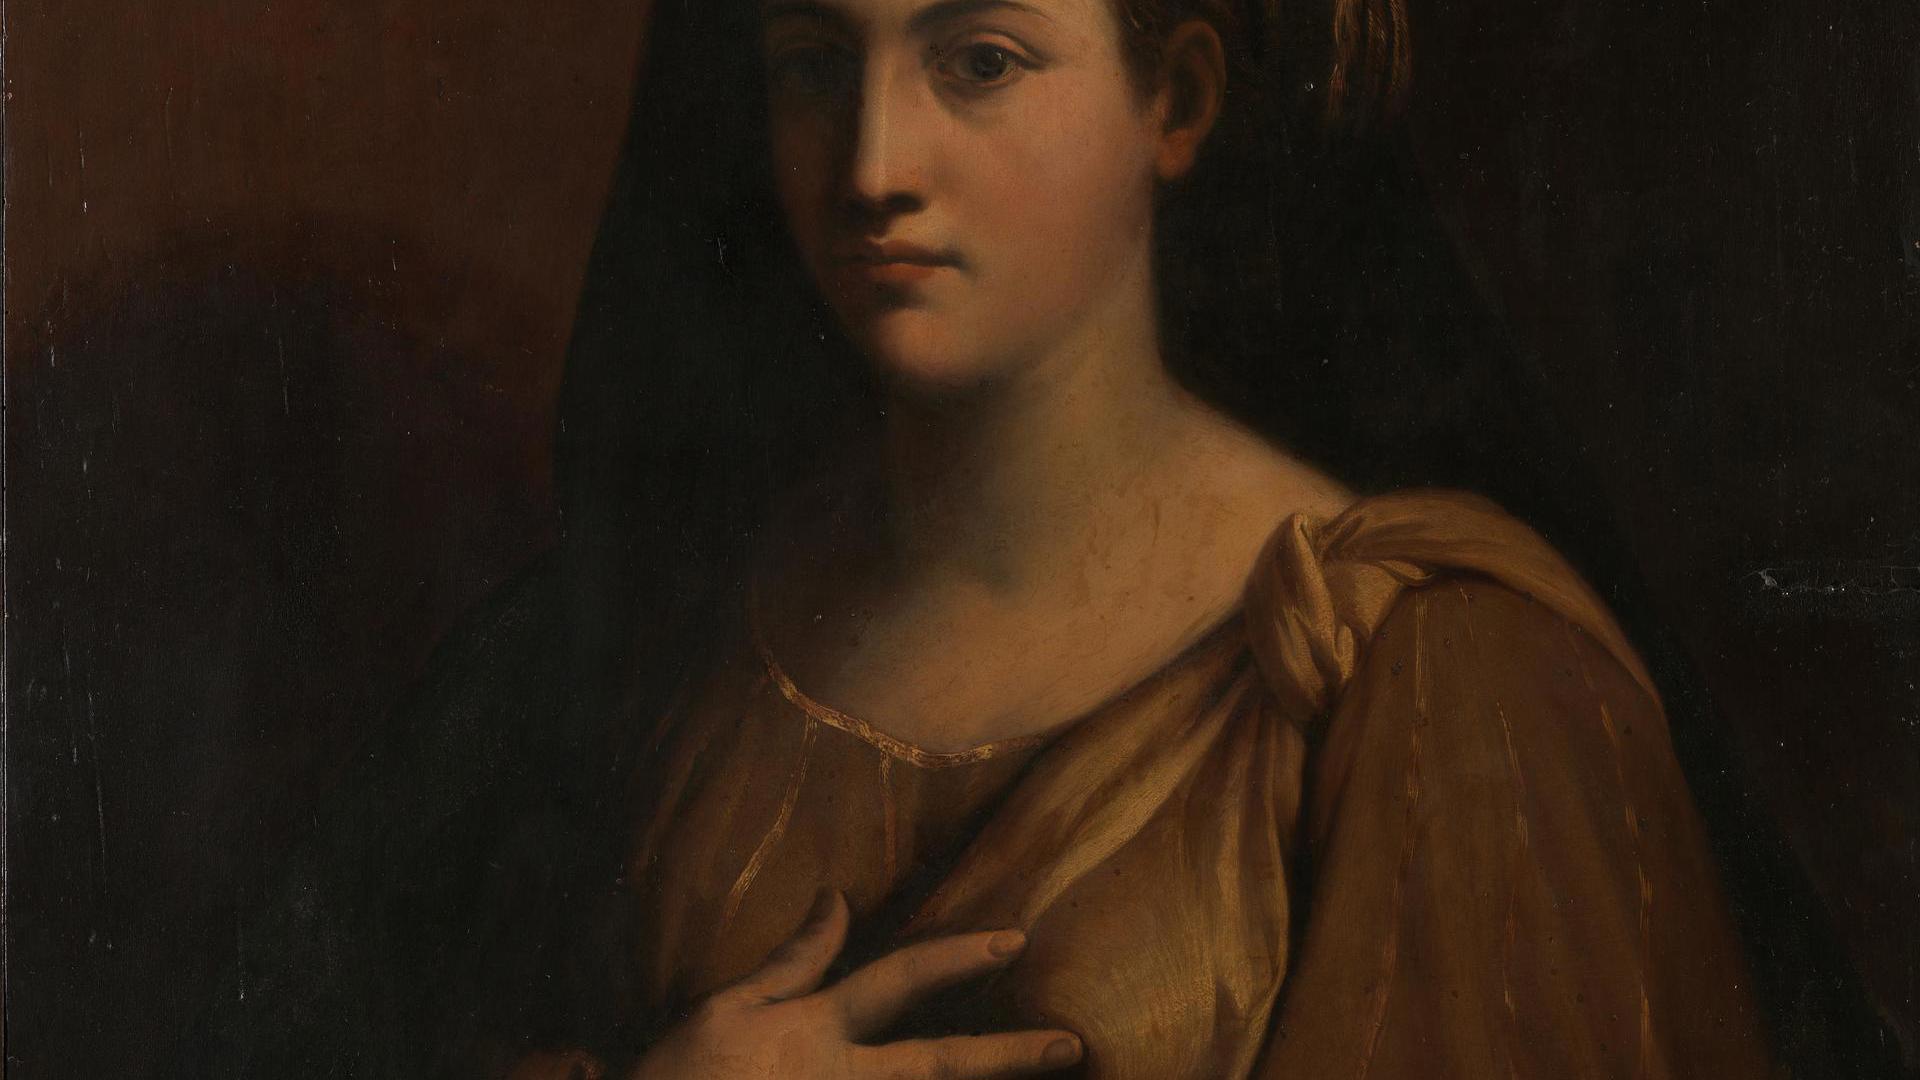 A Female Saint by Italian, Ferrarese or Bolognese follower of Raphael